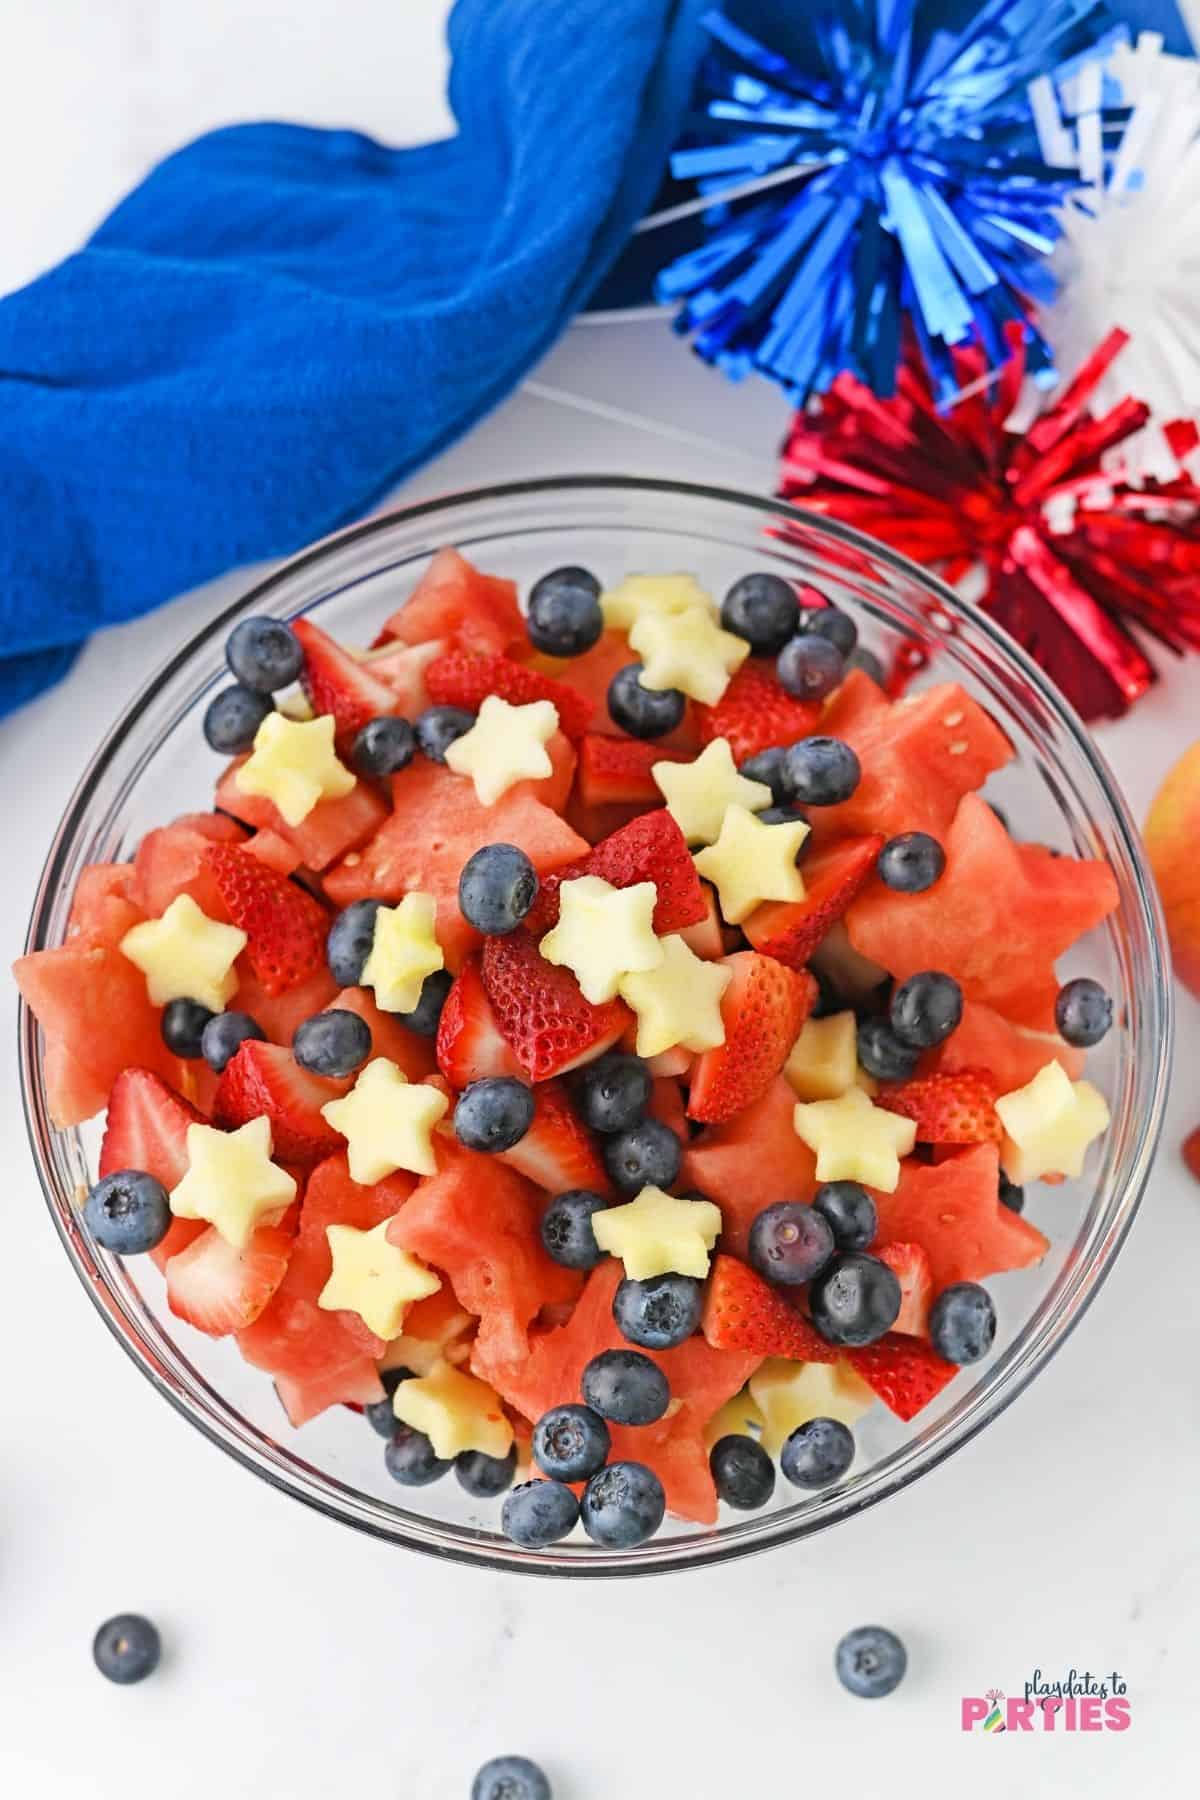 Star spangled fruit salad in a large serving bowl.